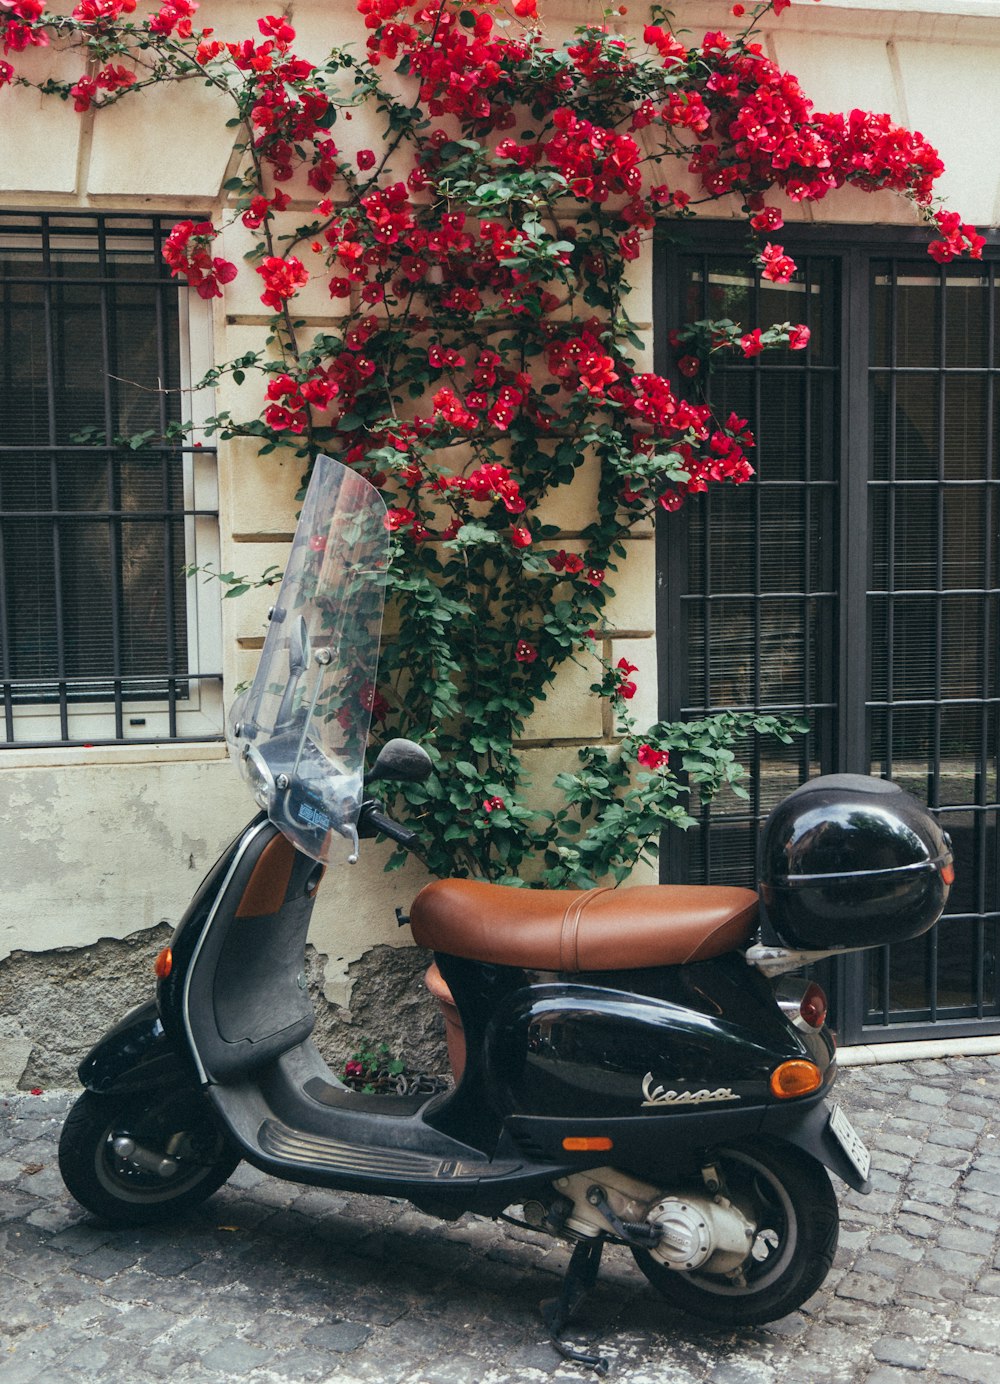 Un scooter estacionado frente a un edificio con flores rojas